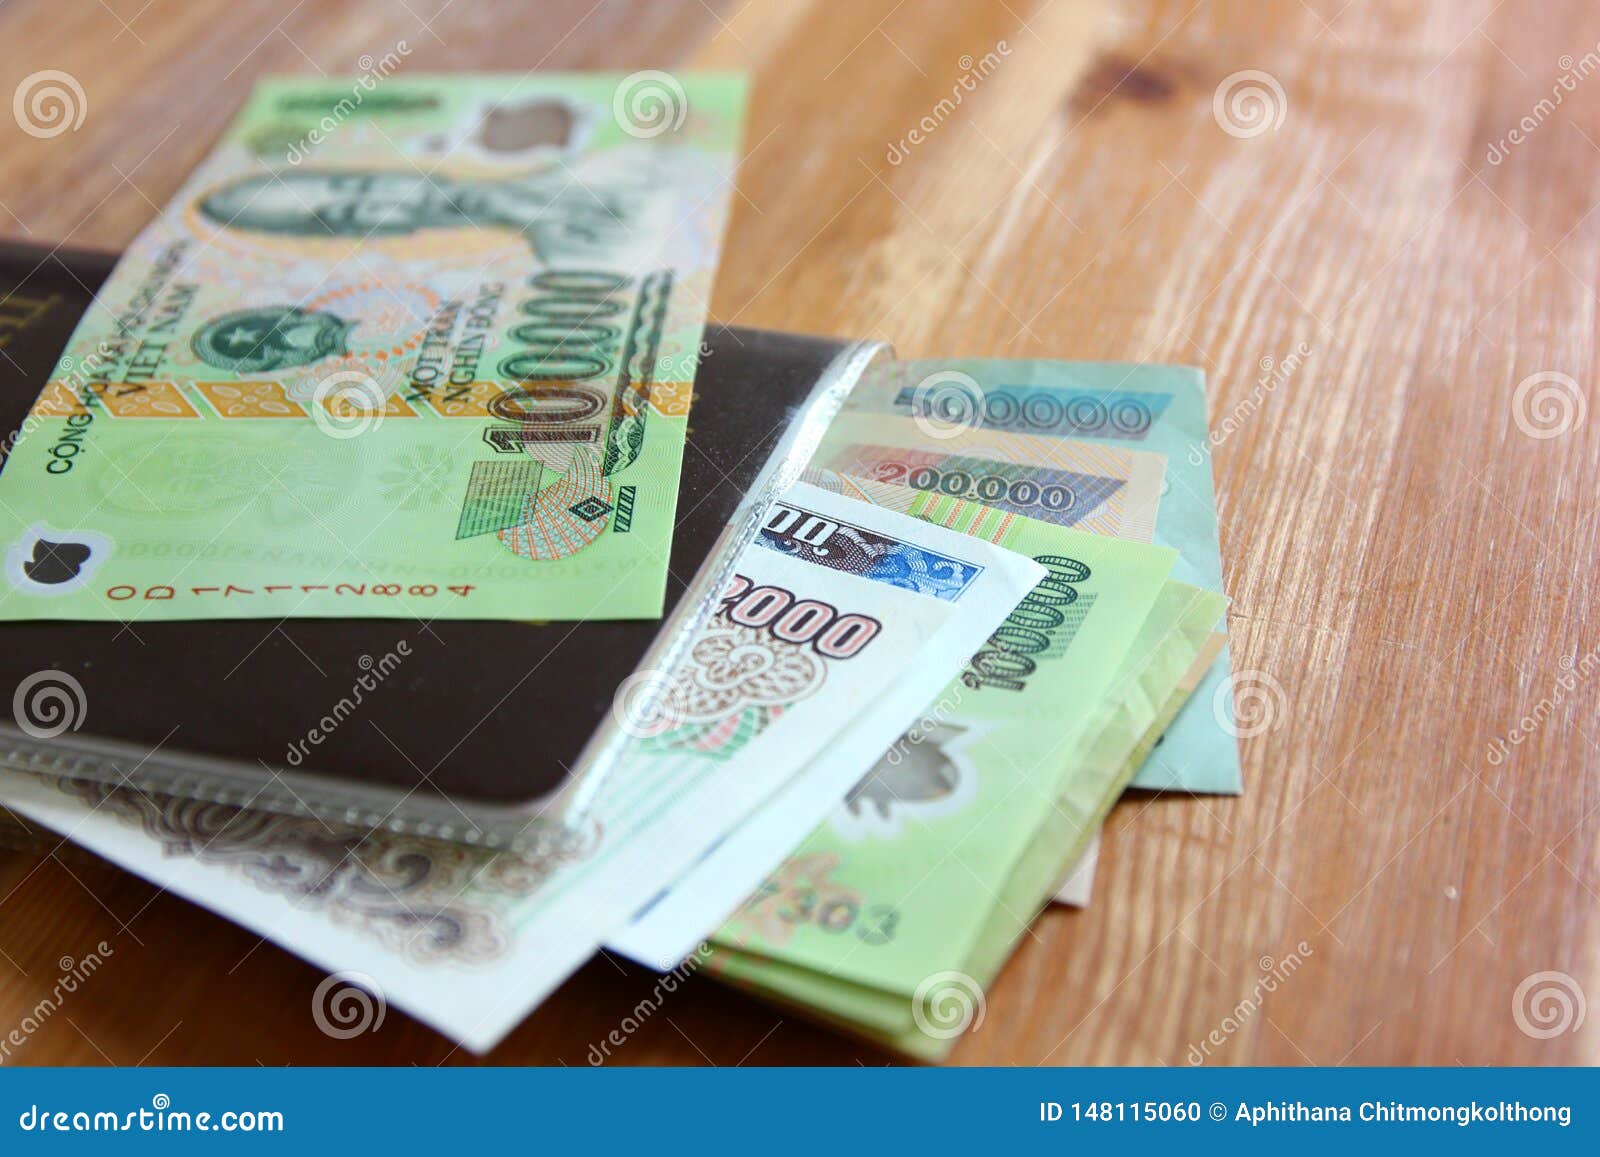 dong vietnam money.vietnamese banknotes many worth.ho chi minh image on  banknote